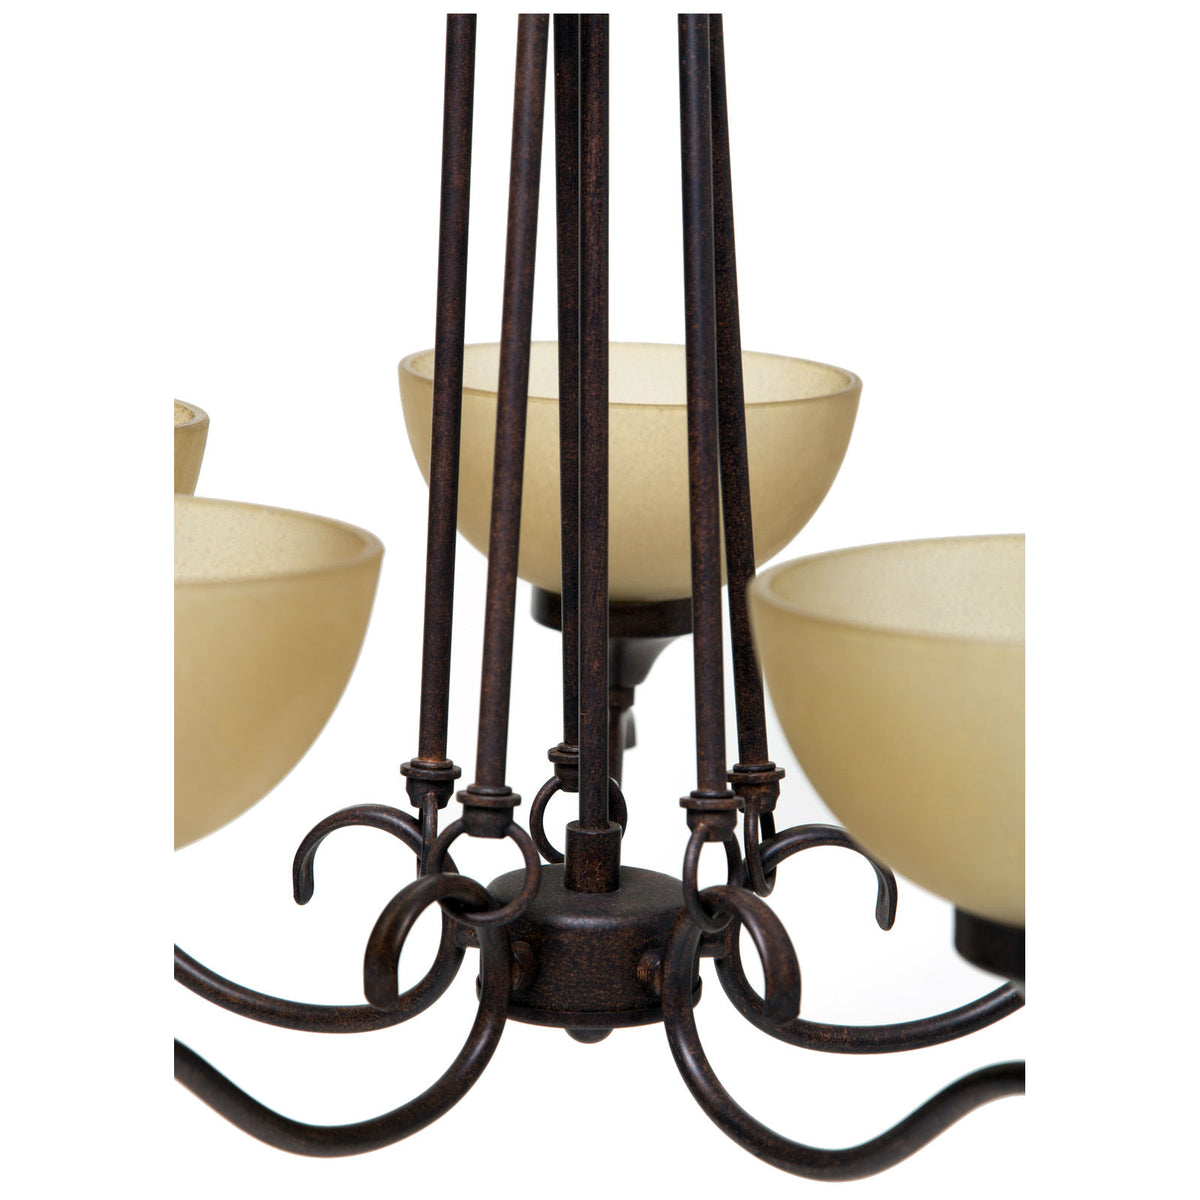 buy chandeliers light fixtures at cheap rate in bulk. wholesale & retail lamps & light fixtures store. home décor ideas, maintenance, repair replacement parts